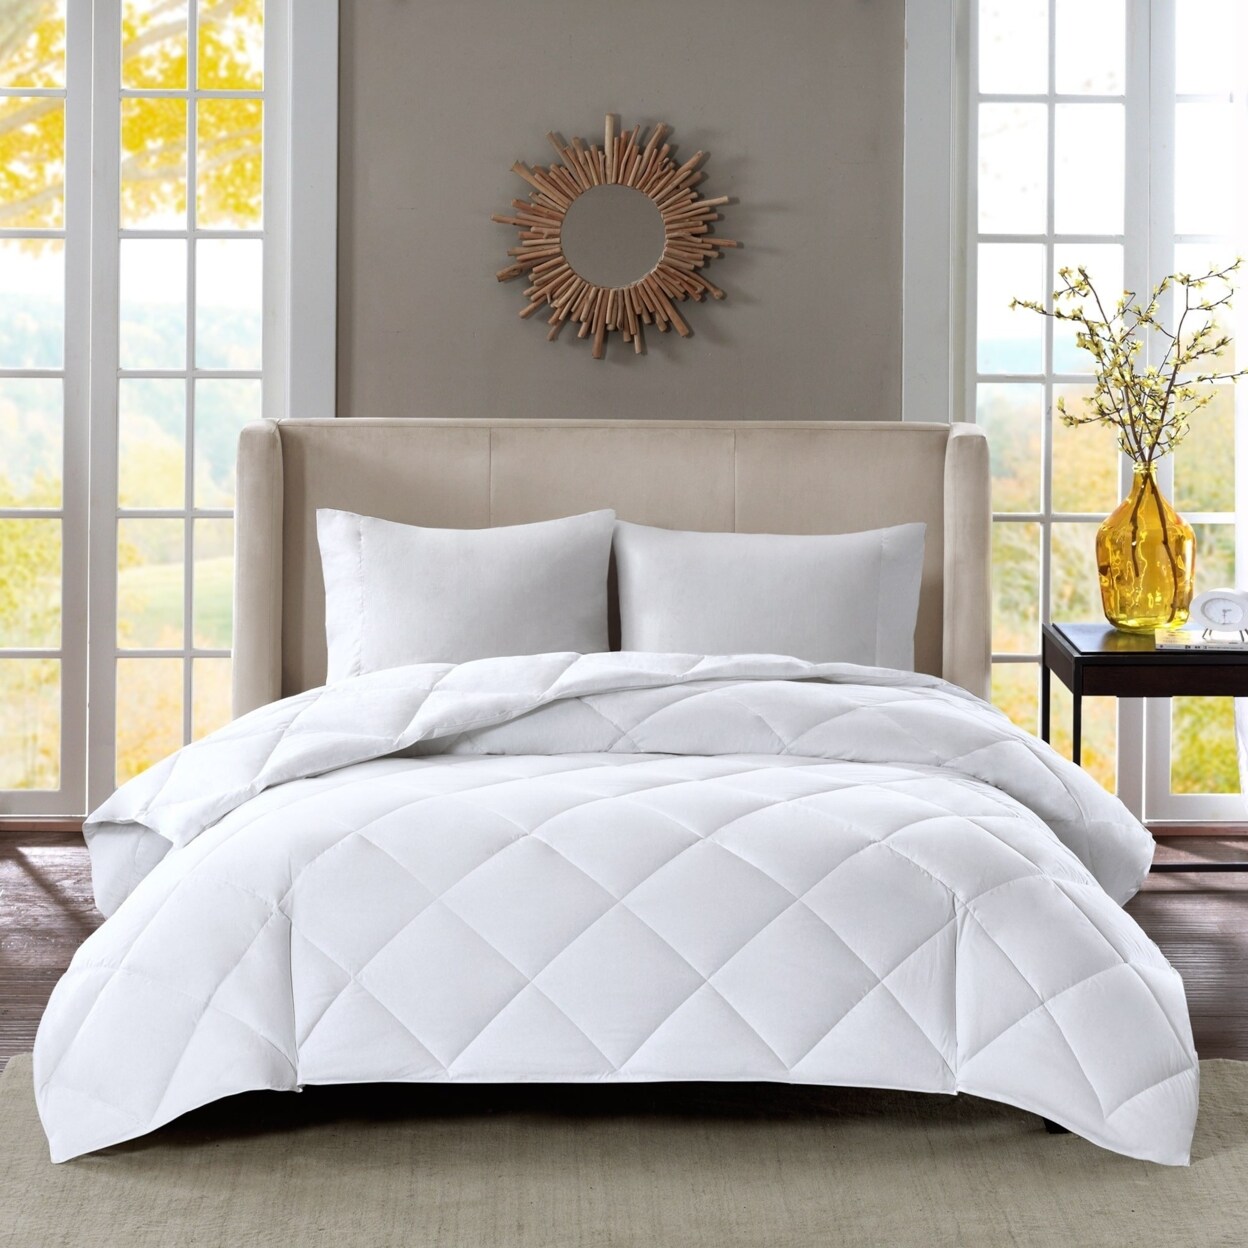 Sleep Philosophy Level 3: Warmest 3M Thinsulate Down Alternative Comforter,  Full/Queen